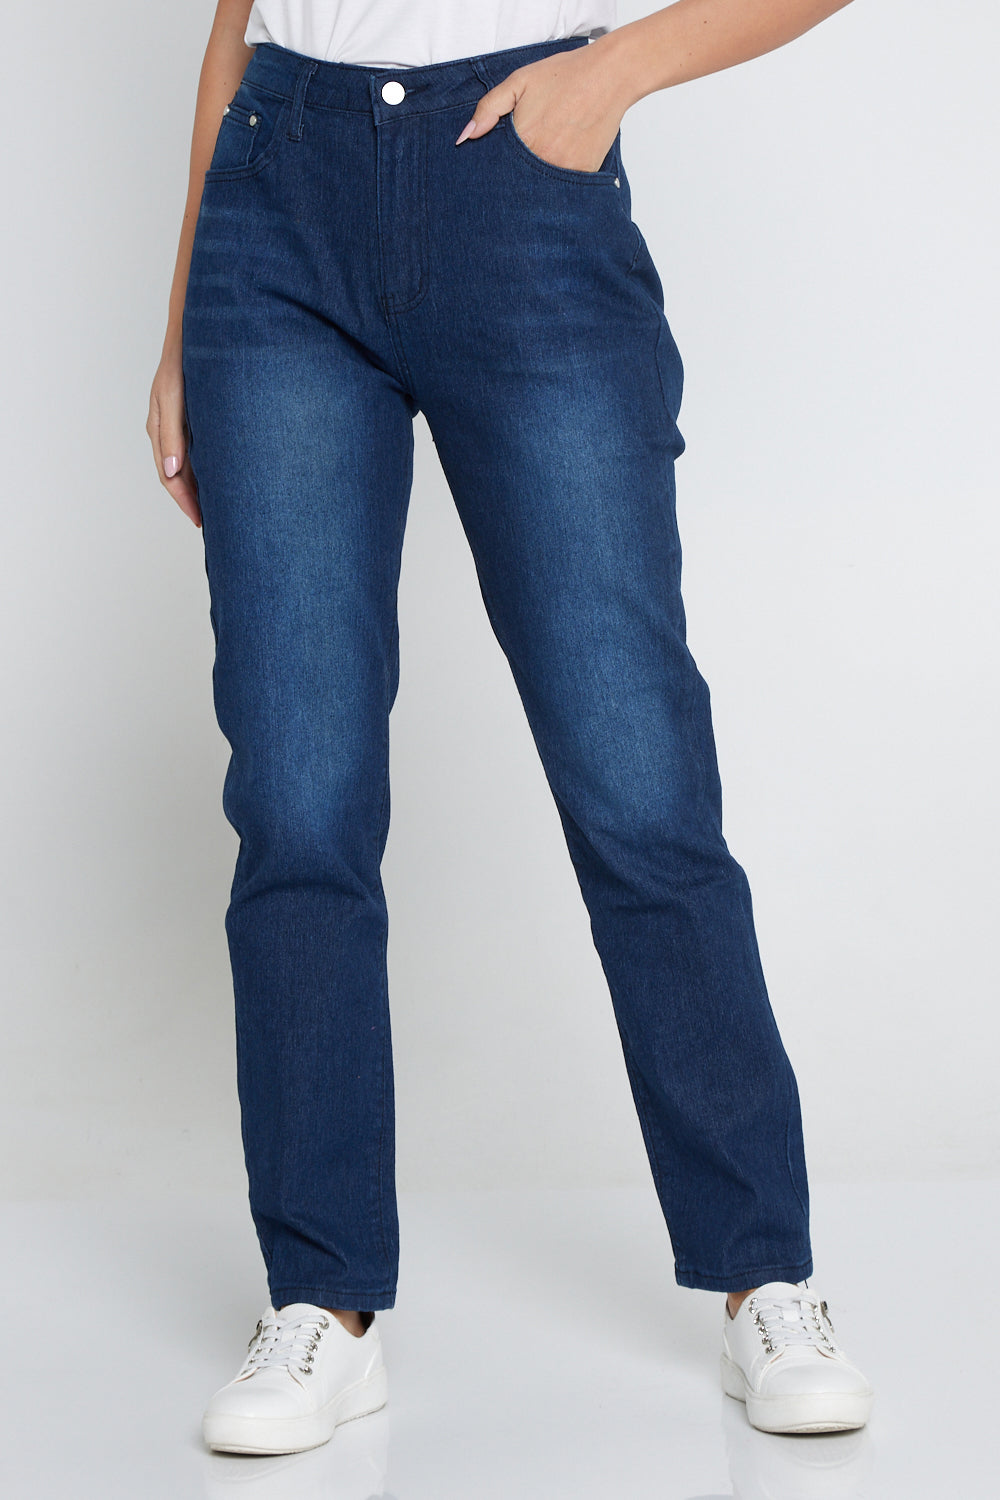 Savannah Cotton Jeans - Dark Denim